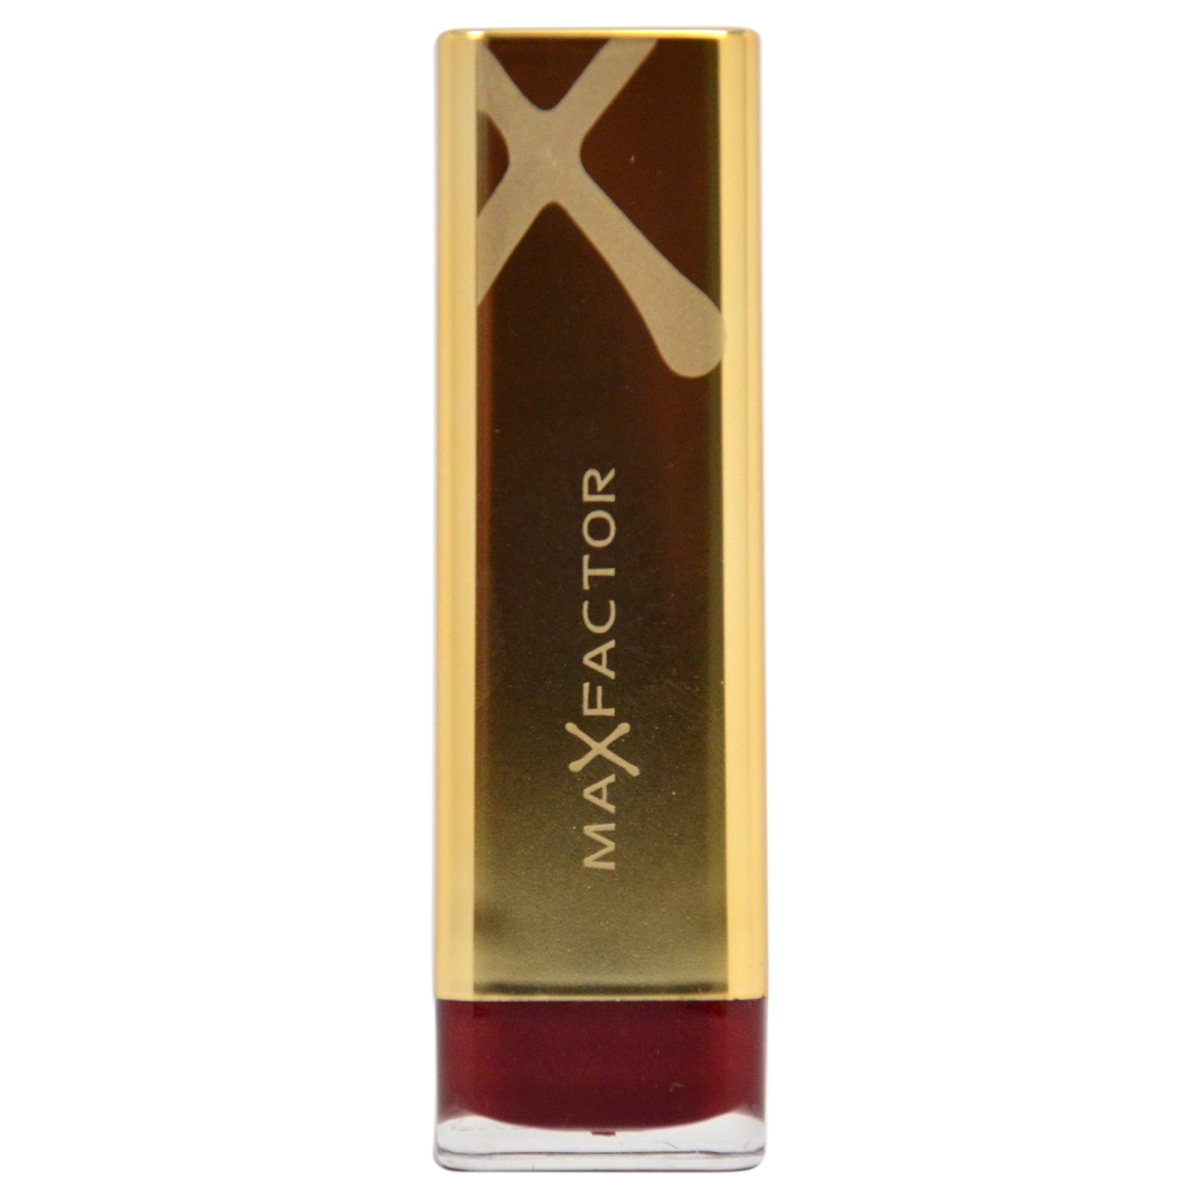 W-c-3595 No. 685 Colour Elixir Mulberry Lipstick For Women